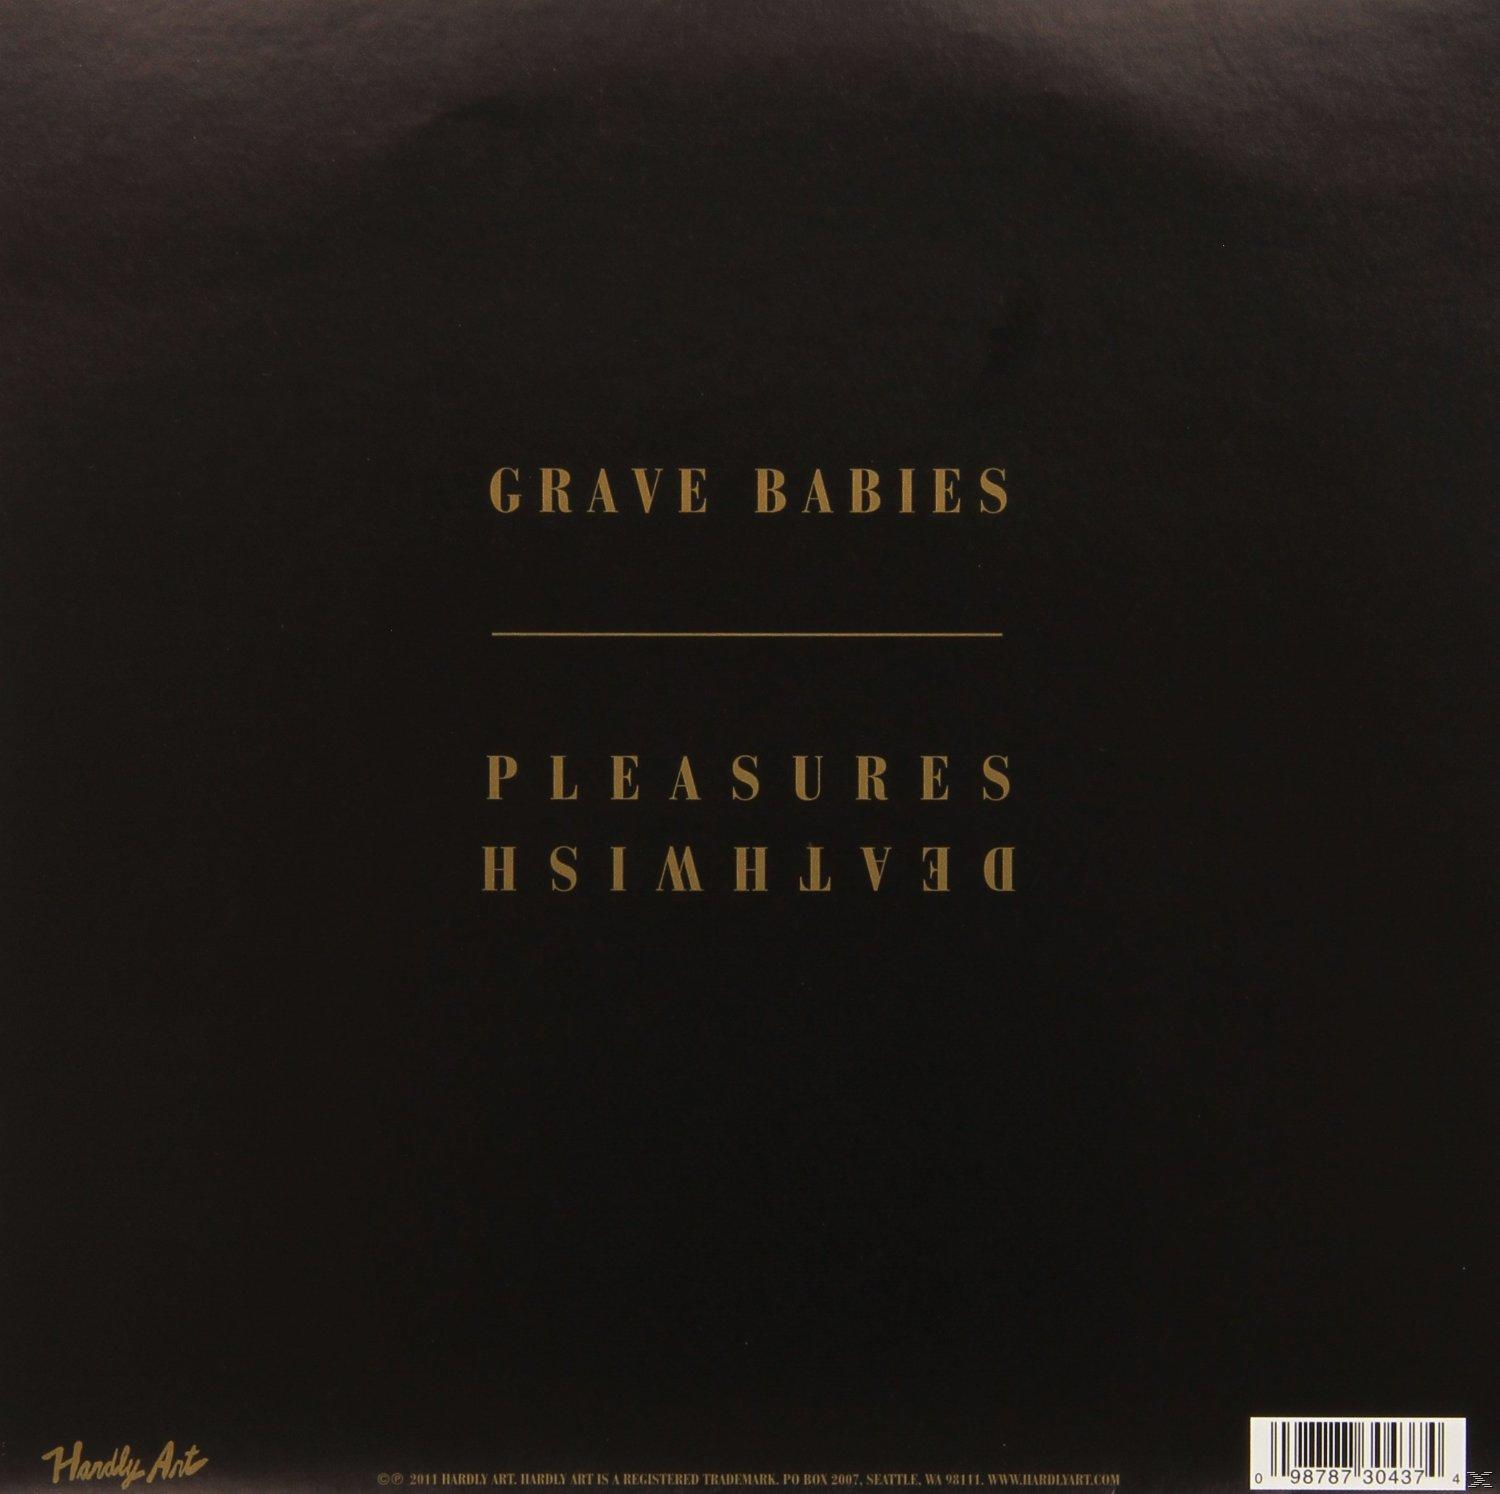 - (Vinyl) Pleasures - EP Grave Babies